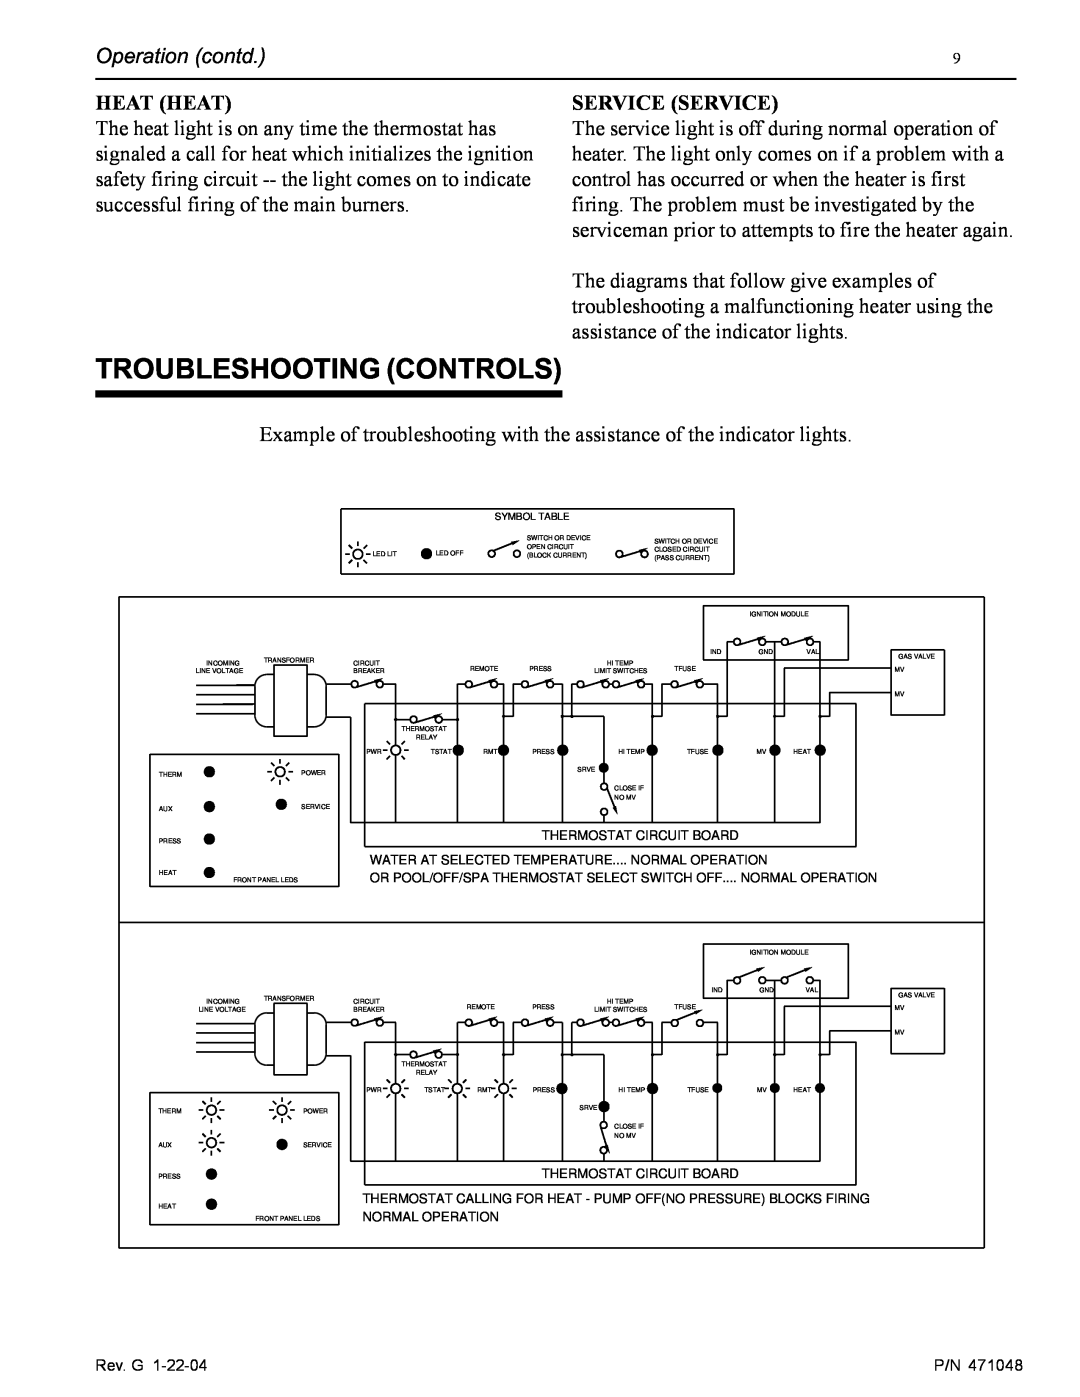 Pentair 100 installation manual Troubleshooting Controls, Heat Heat, Service Service 